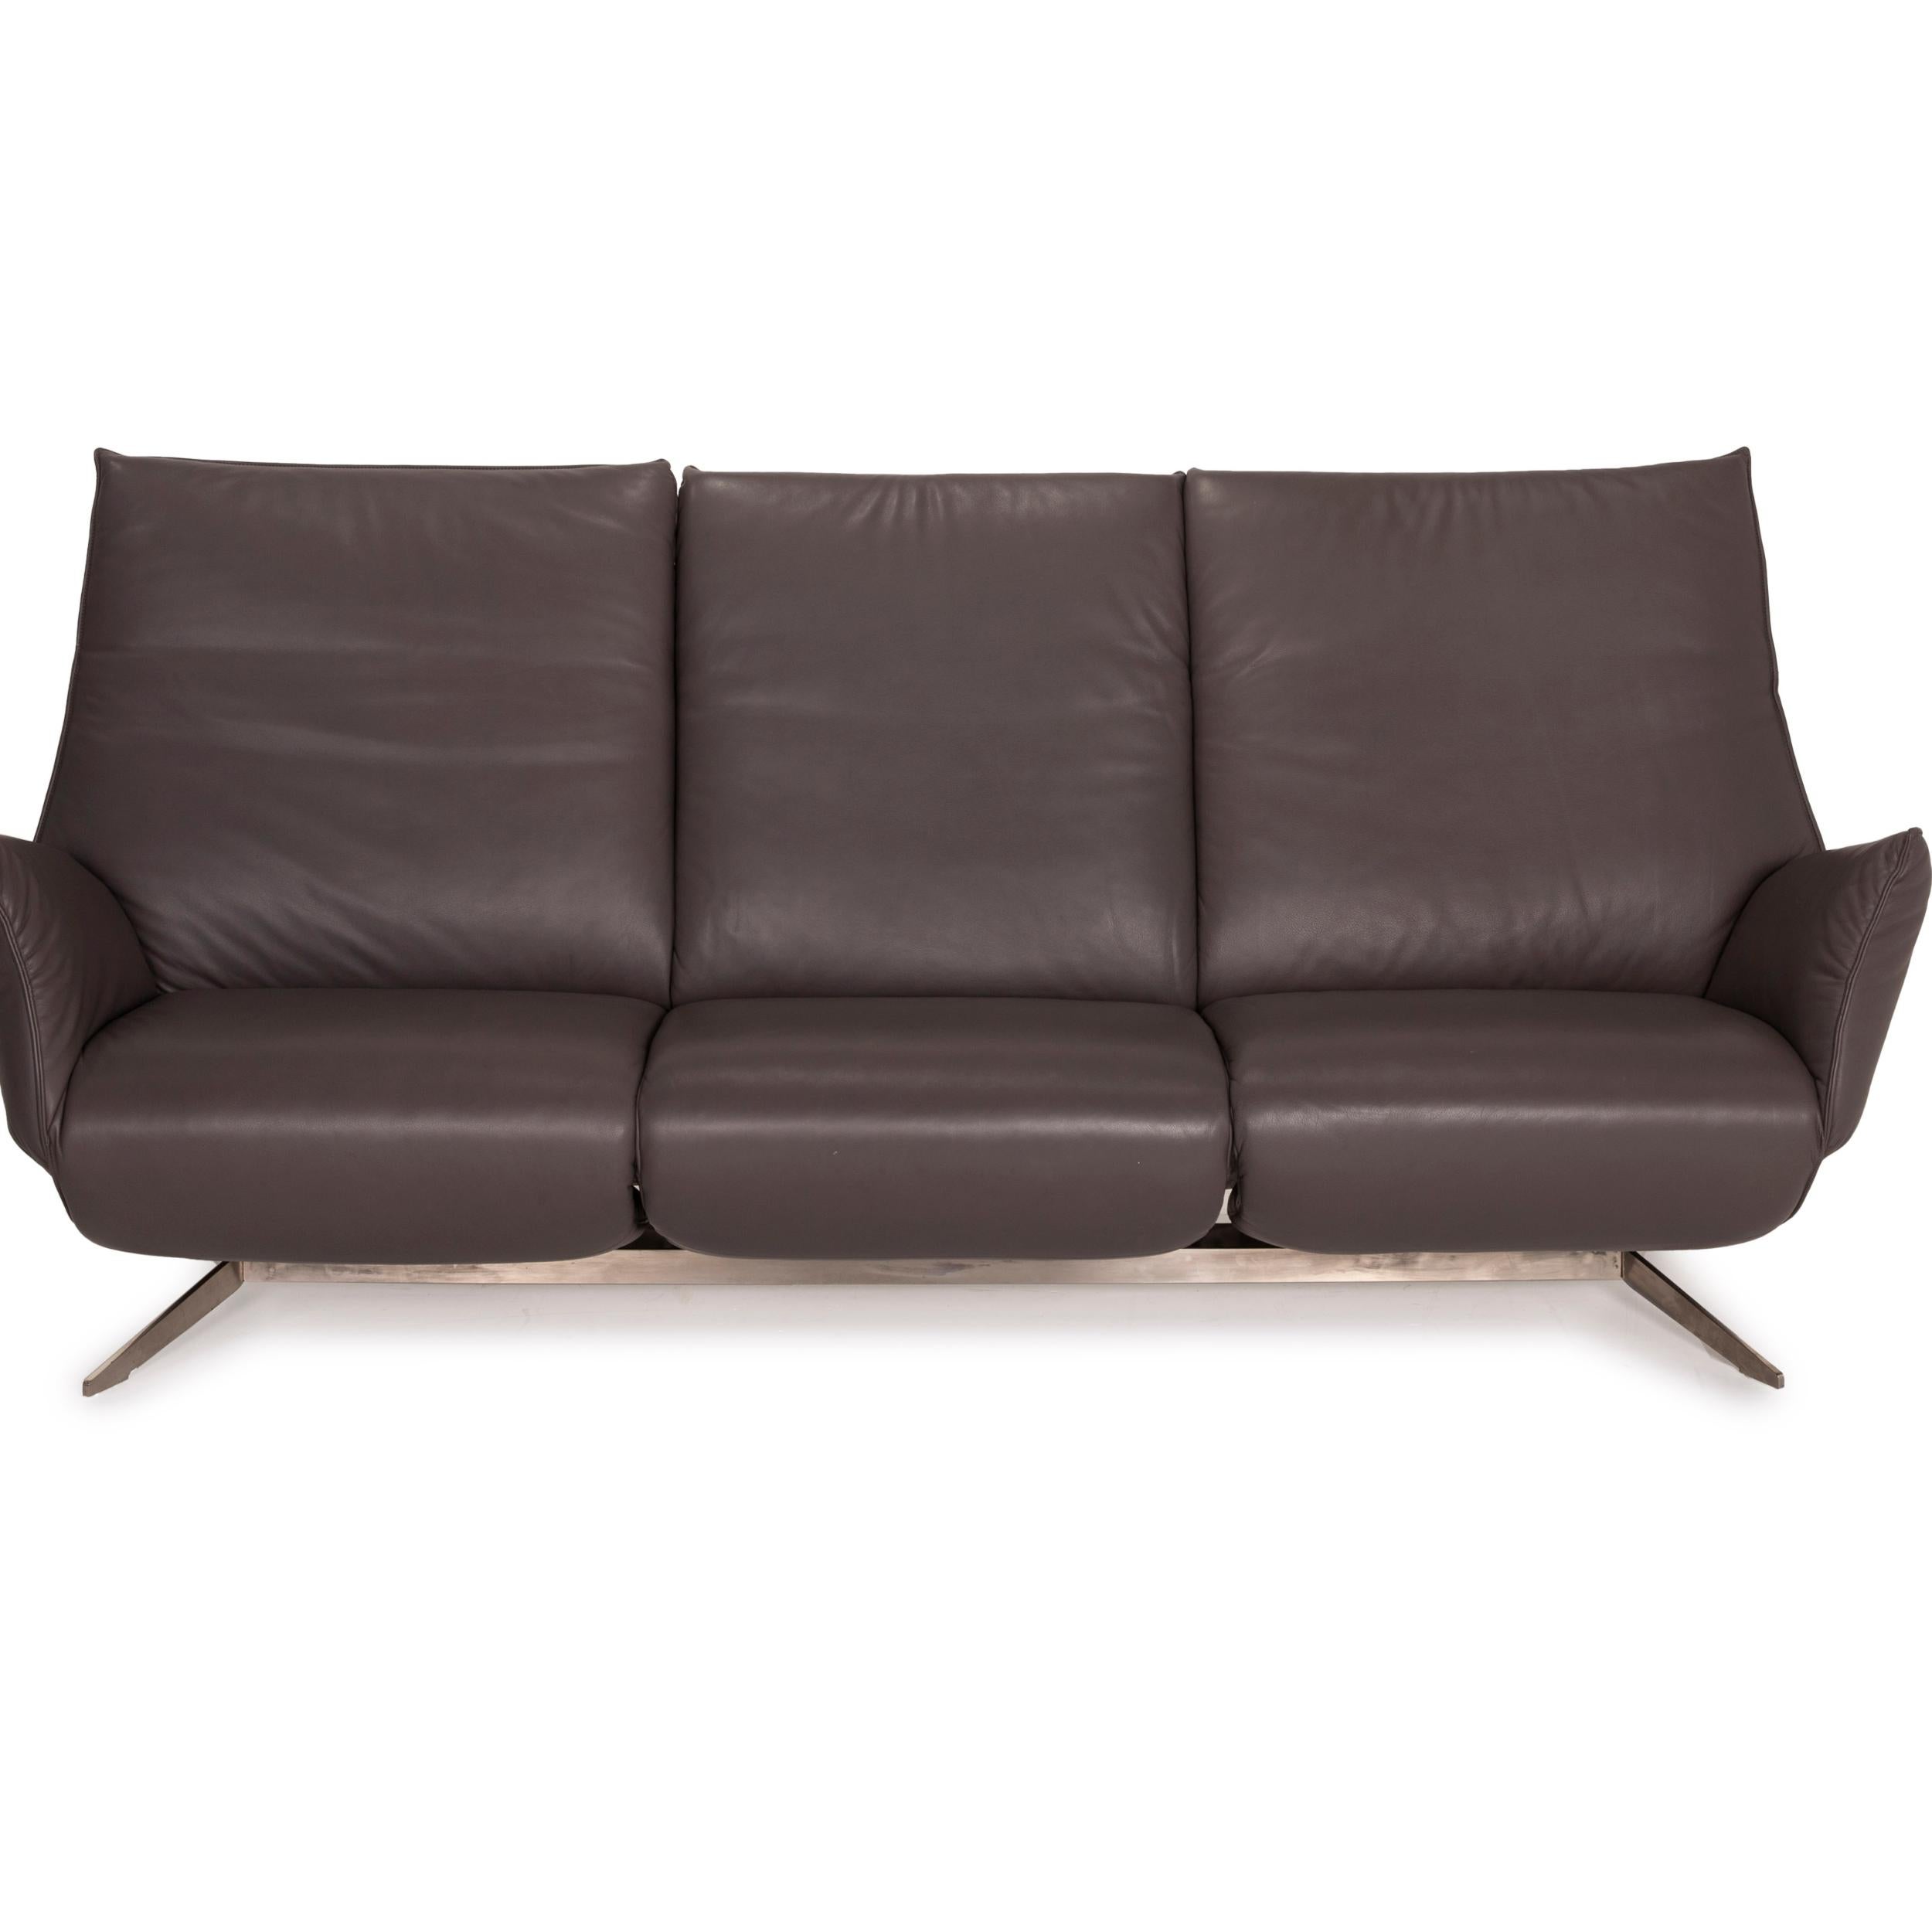 Koinor Evita Leather Sofa Set Gray Brown 1x Three-Seater 1x Stool For Sale 7